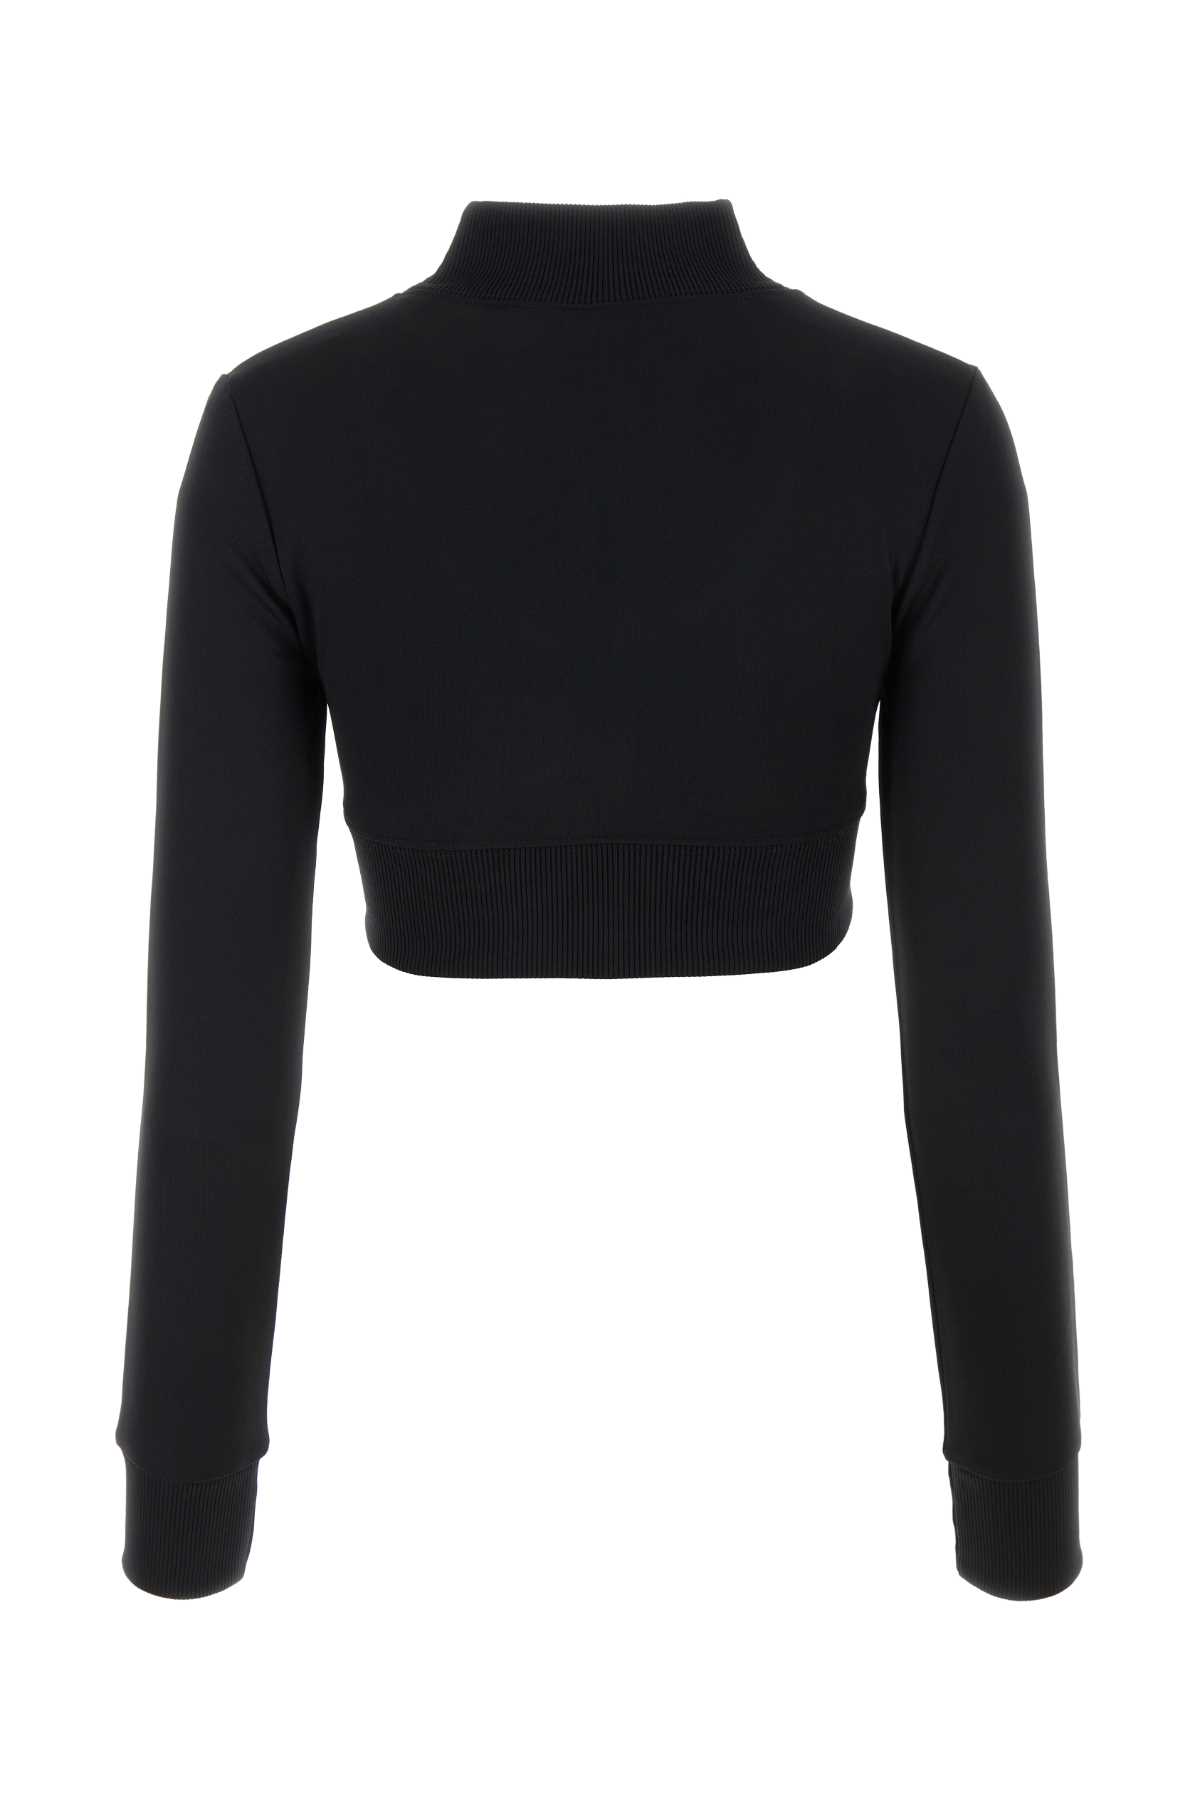 Courrèges Black Polyester Sweatshirt